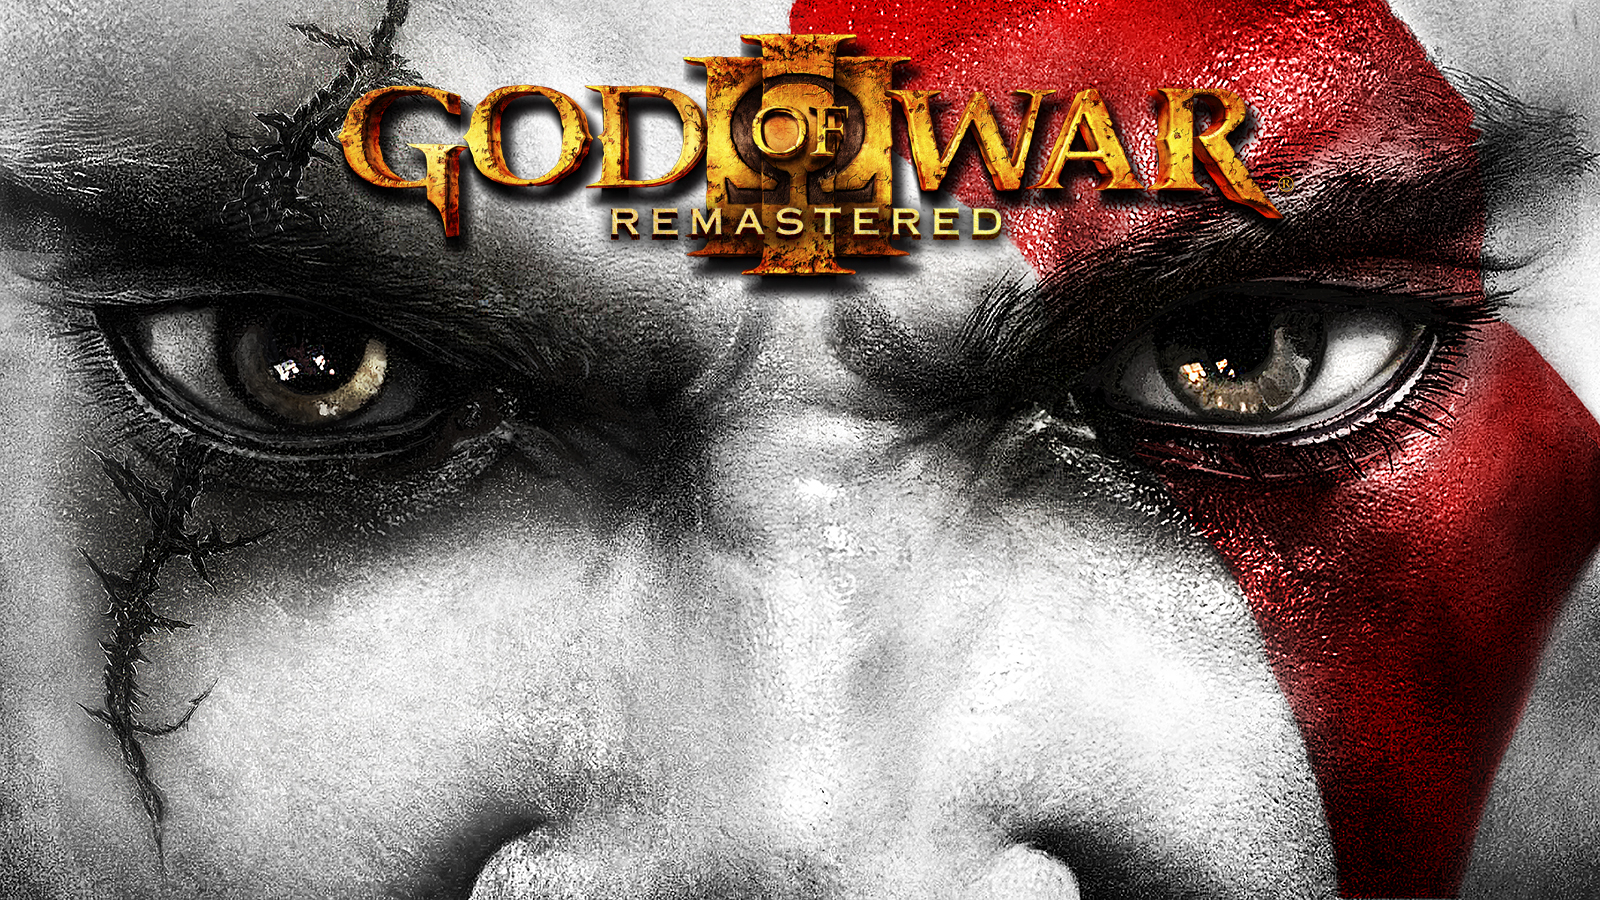 God of War God-of-war-iii-remastered-listing-thumb-01-ps4-us-13mar15?$Icon$